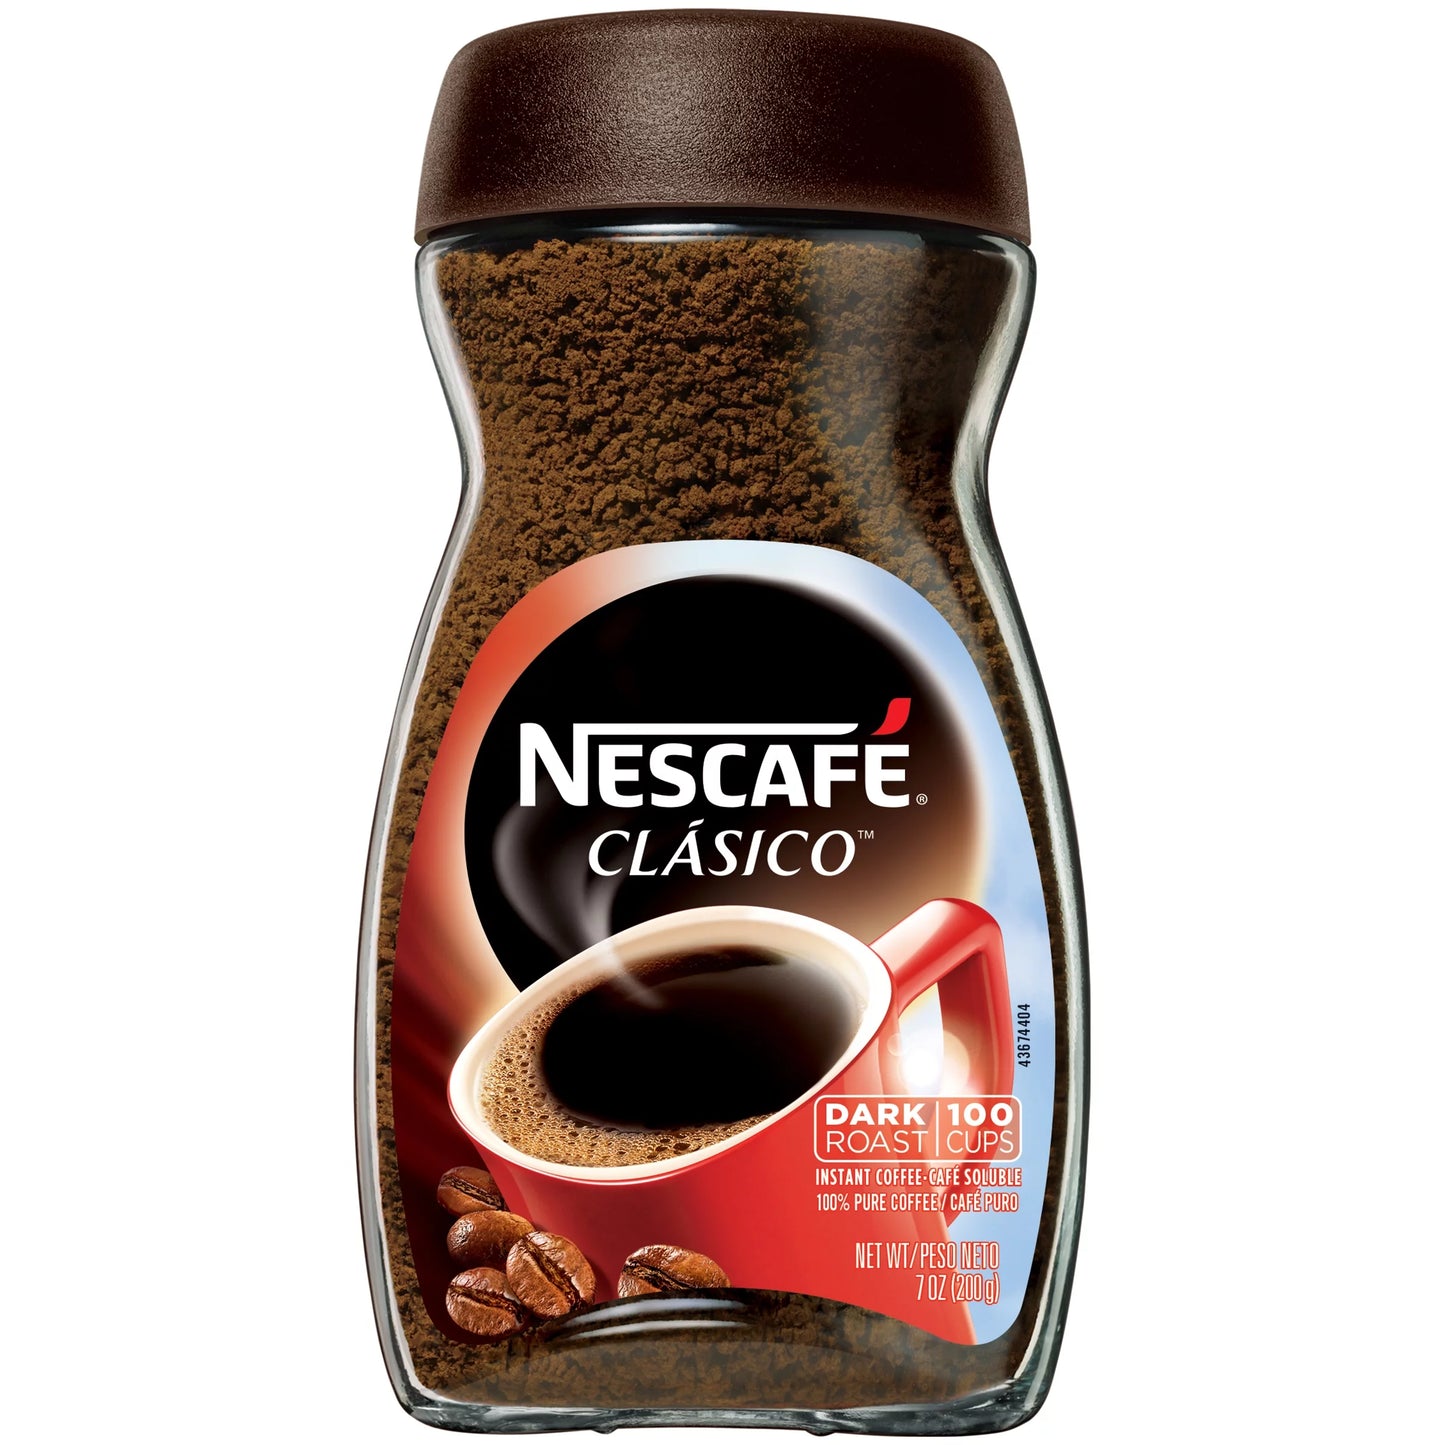 Nescafe Clasico Dark Roast 7oz 6 Count